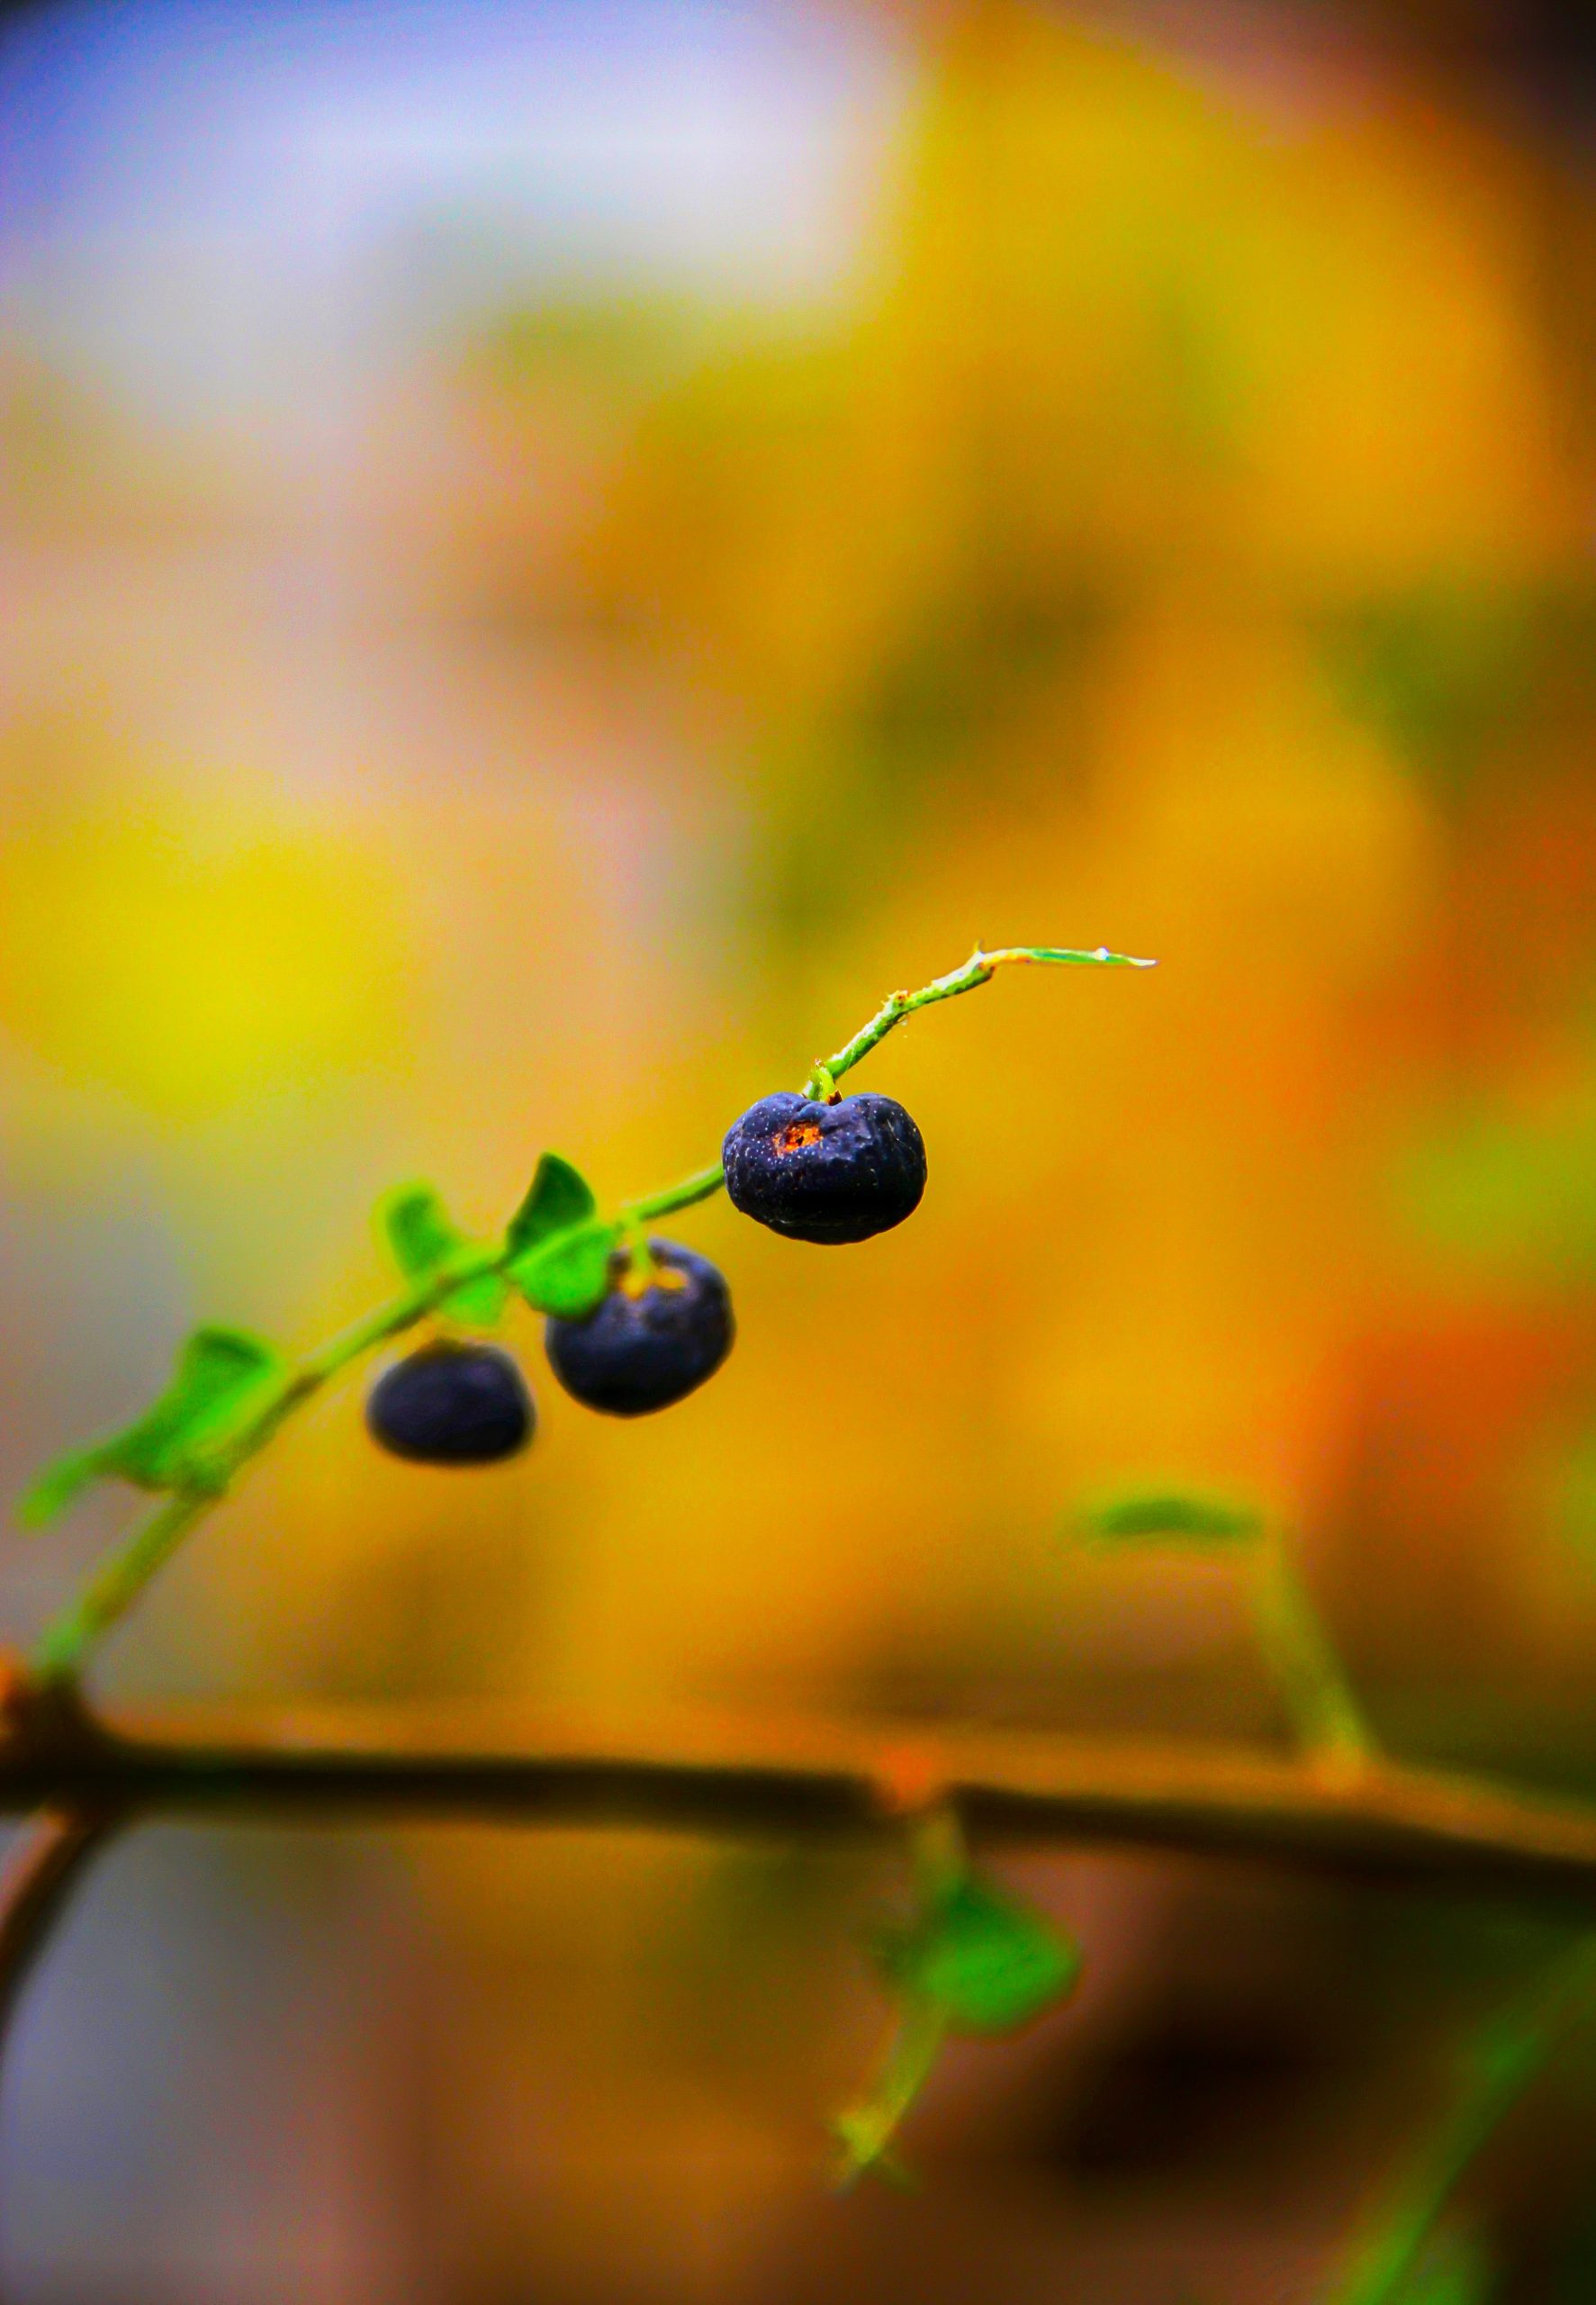 blackberry on its plant